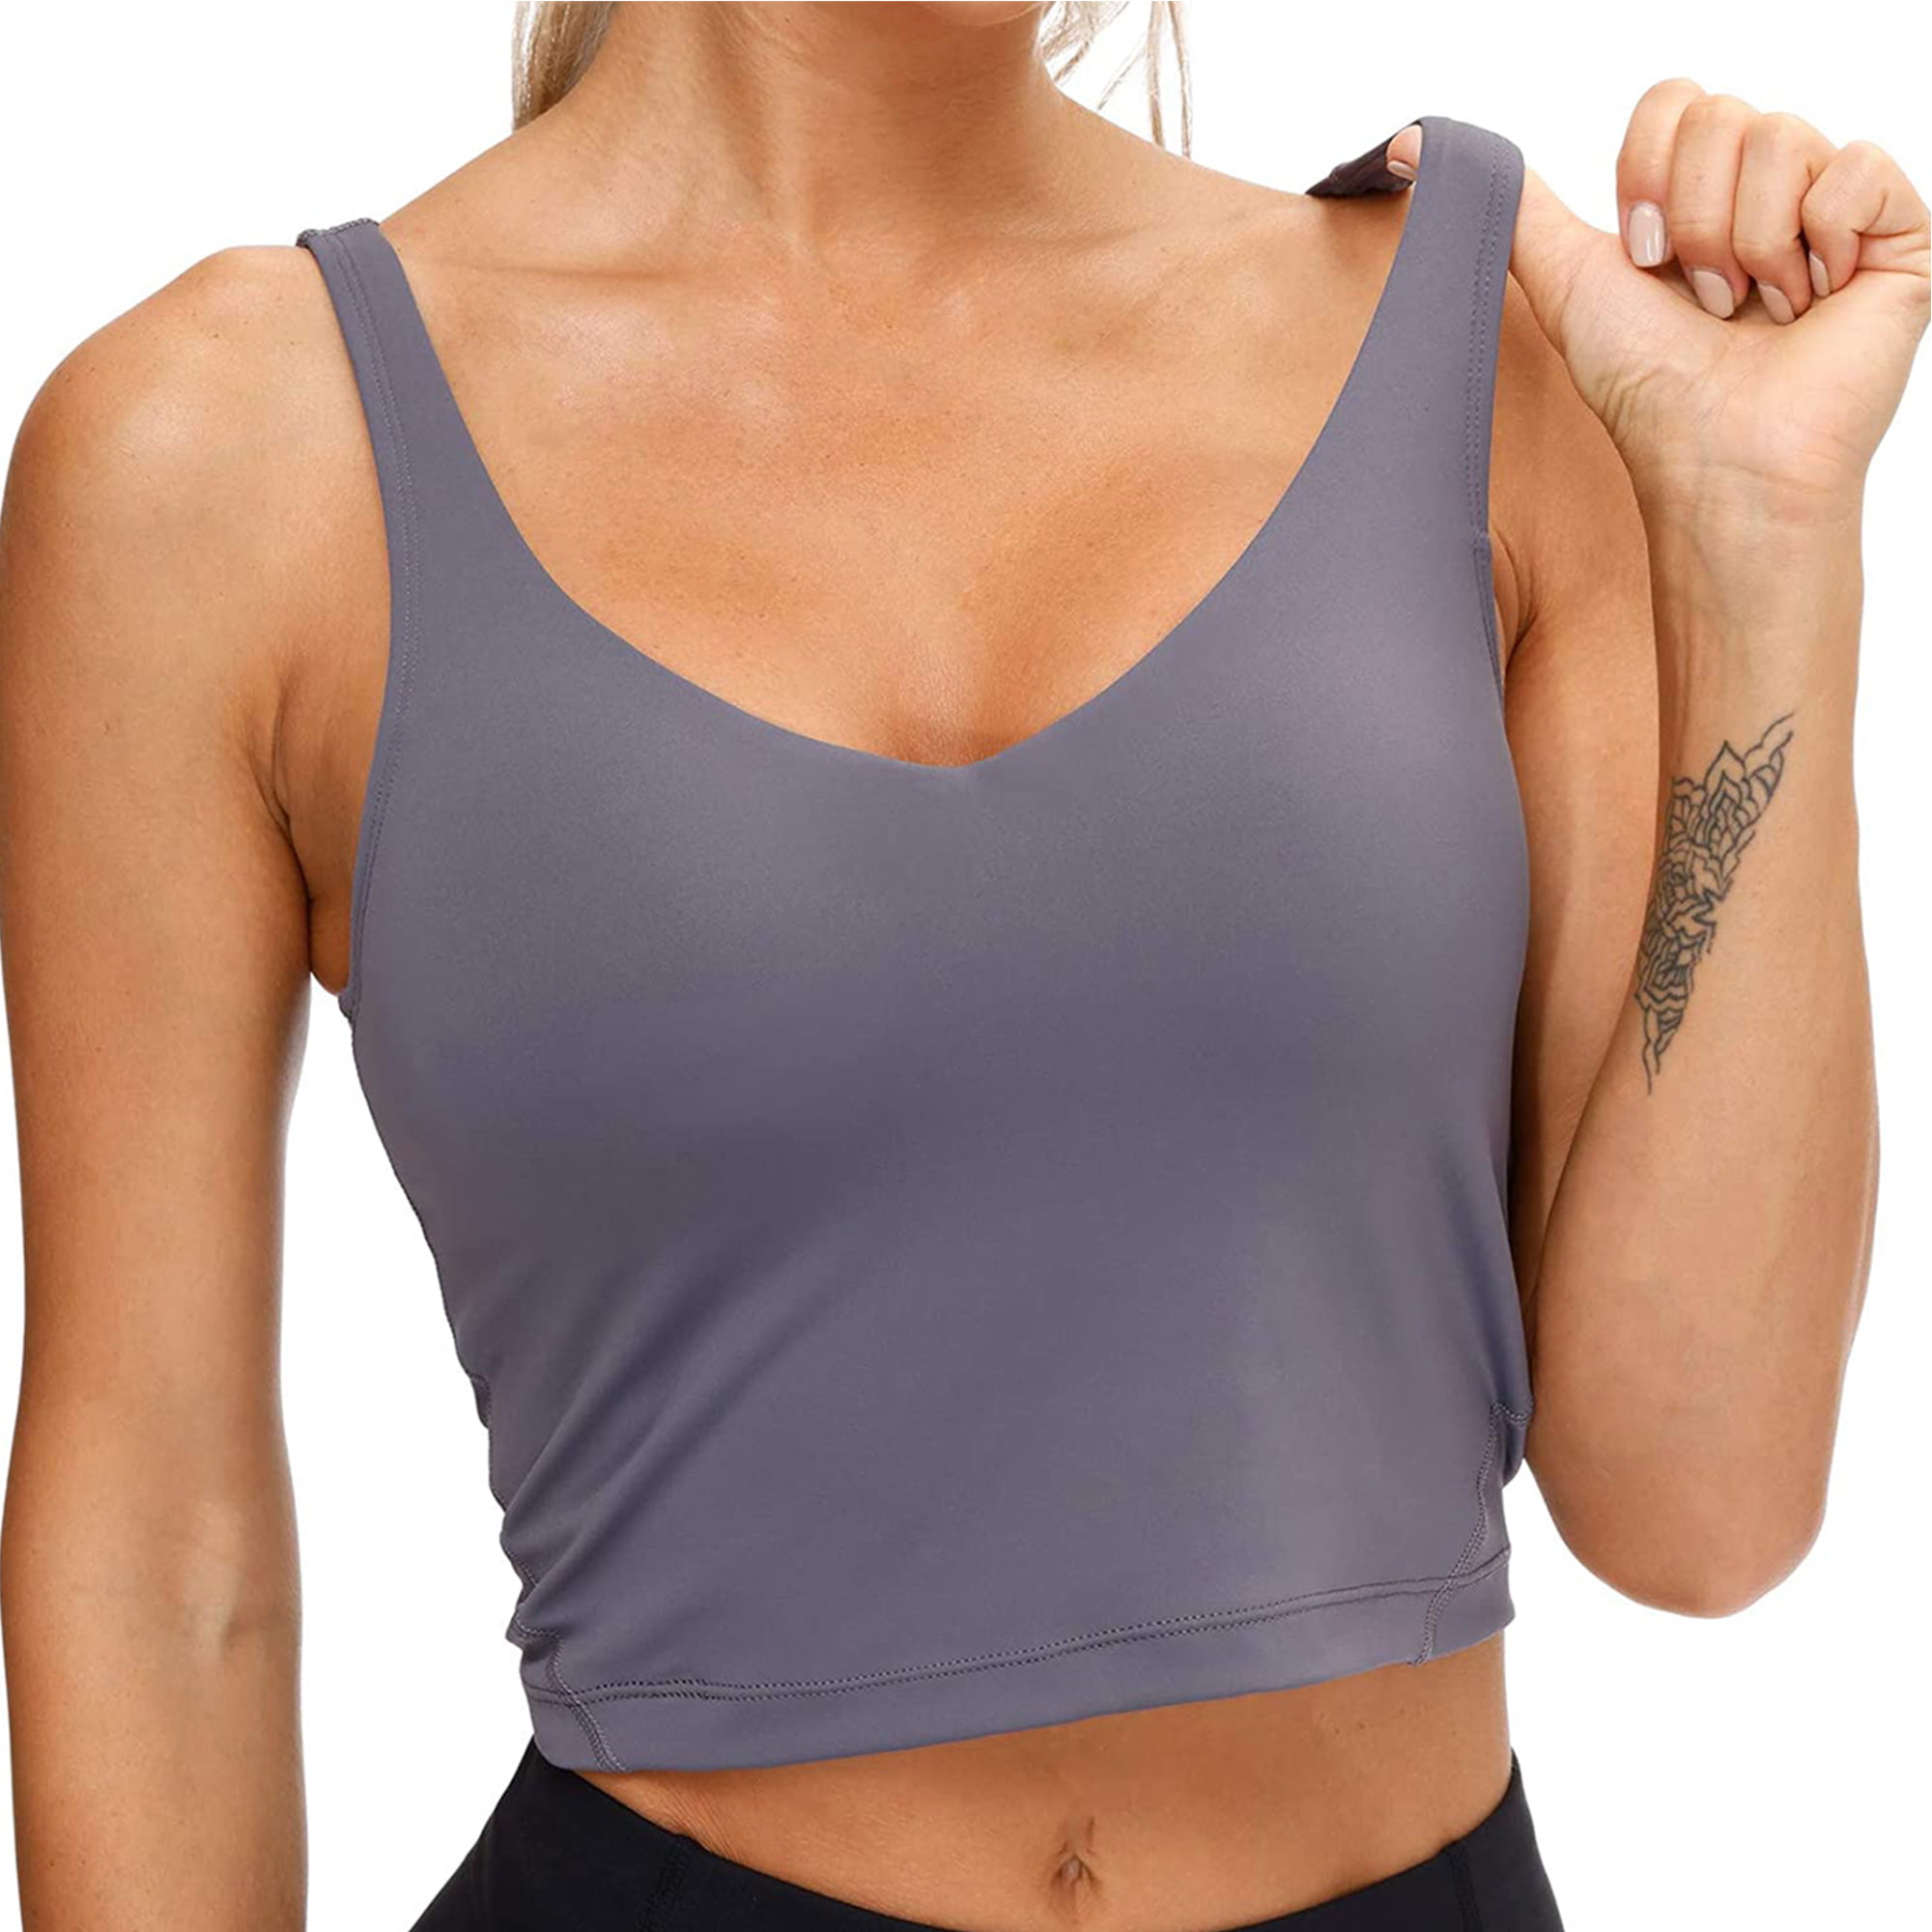 Buy SHAPERX Sports Bras for Women, Longline Medium Support Yoga